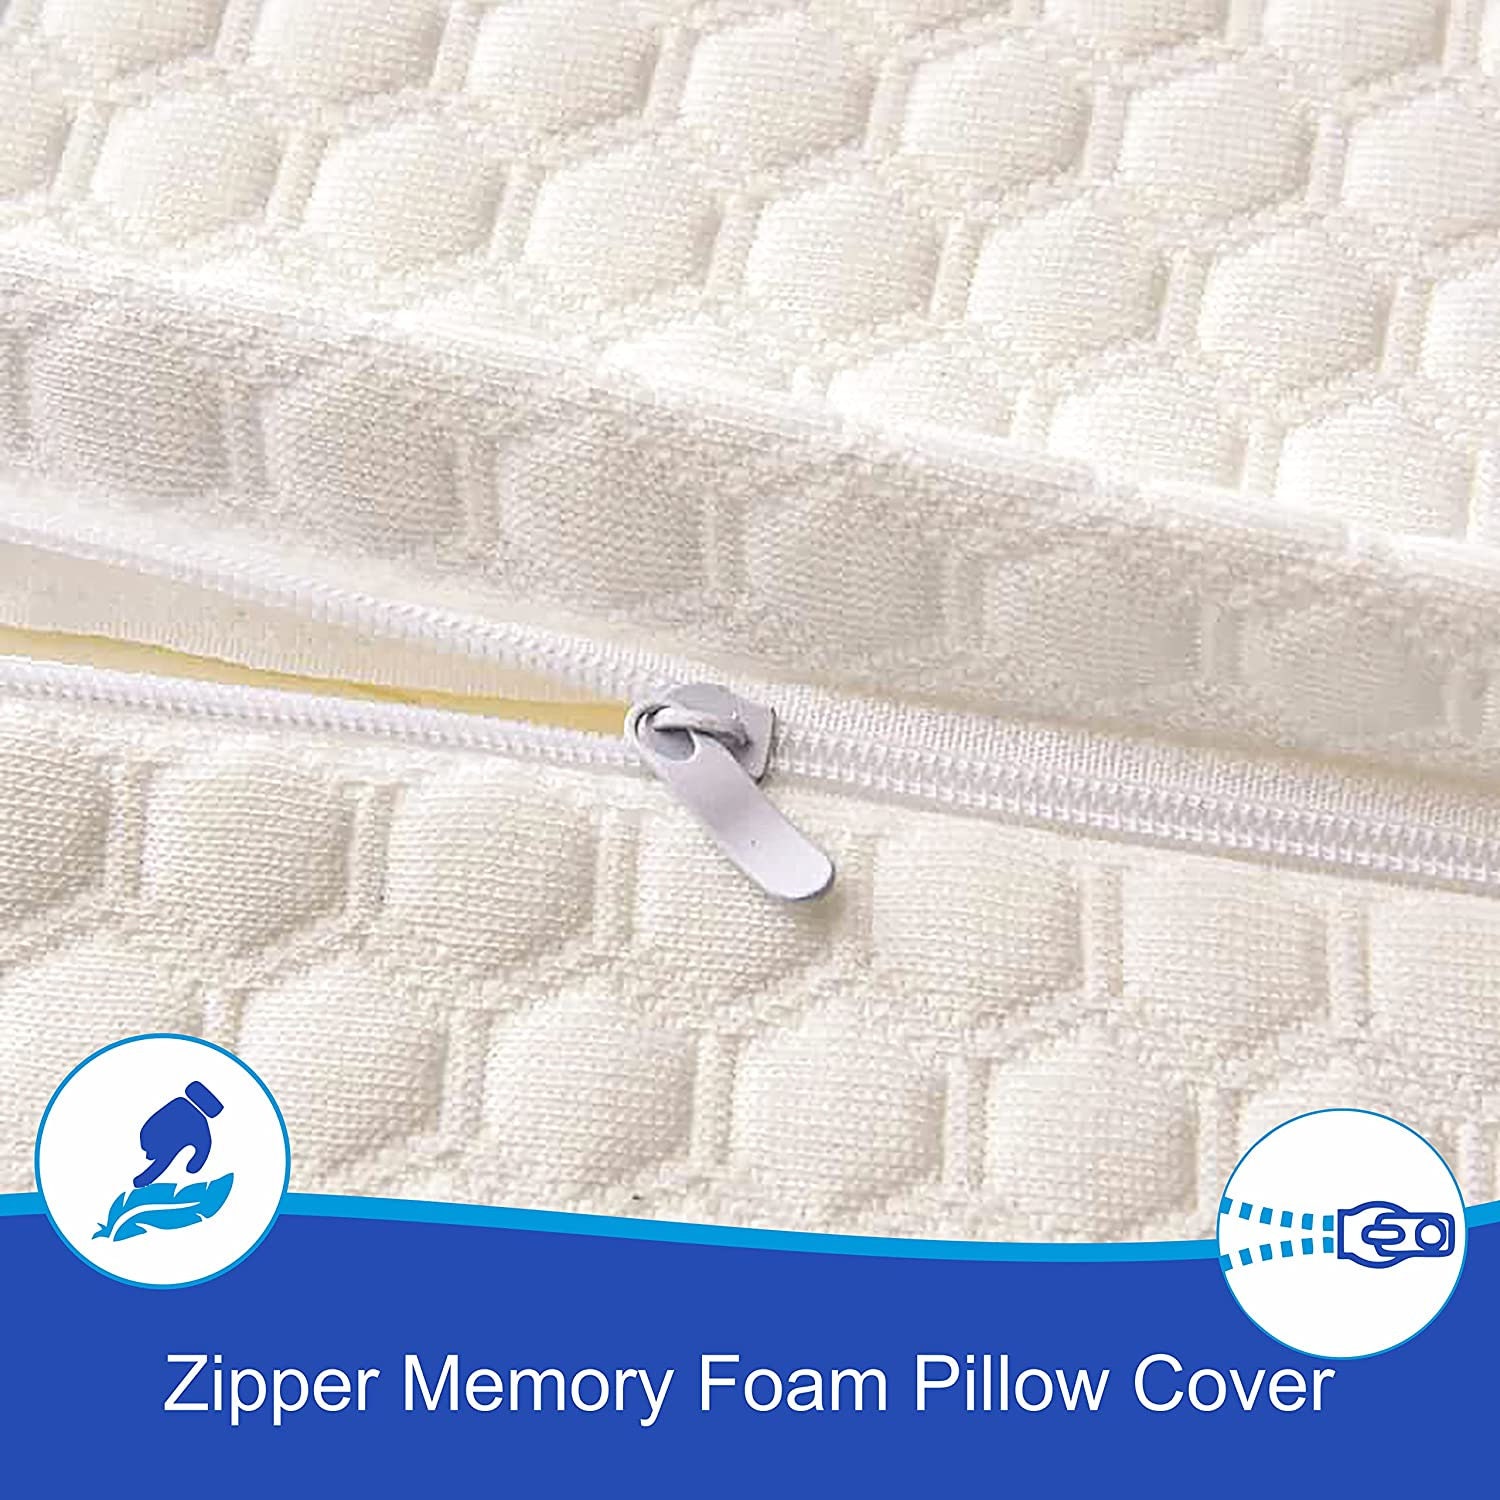 Shredded Foam Crumb High-quality Upholstery Foam Shred Crumb Filling for  Cushions, Bean Bag Inserts Etc 